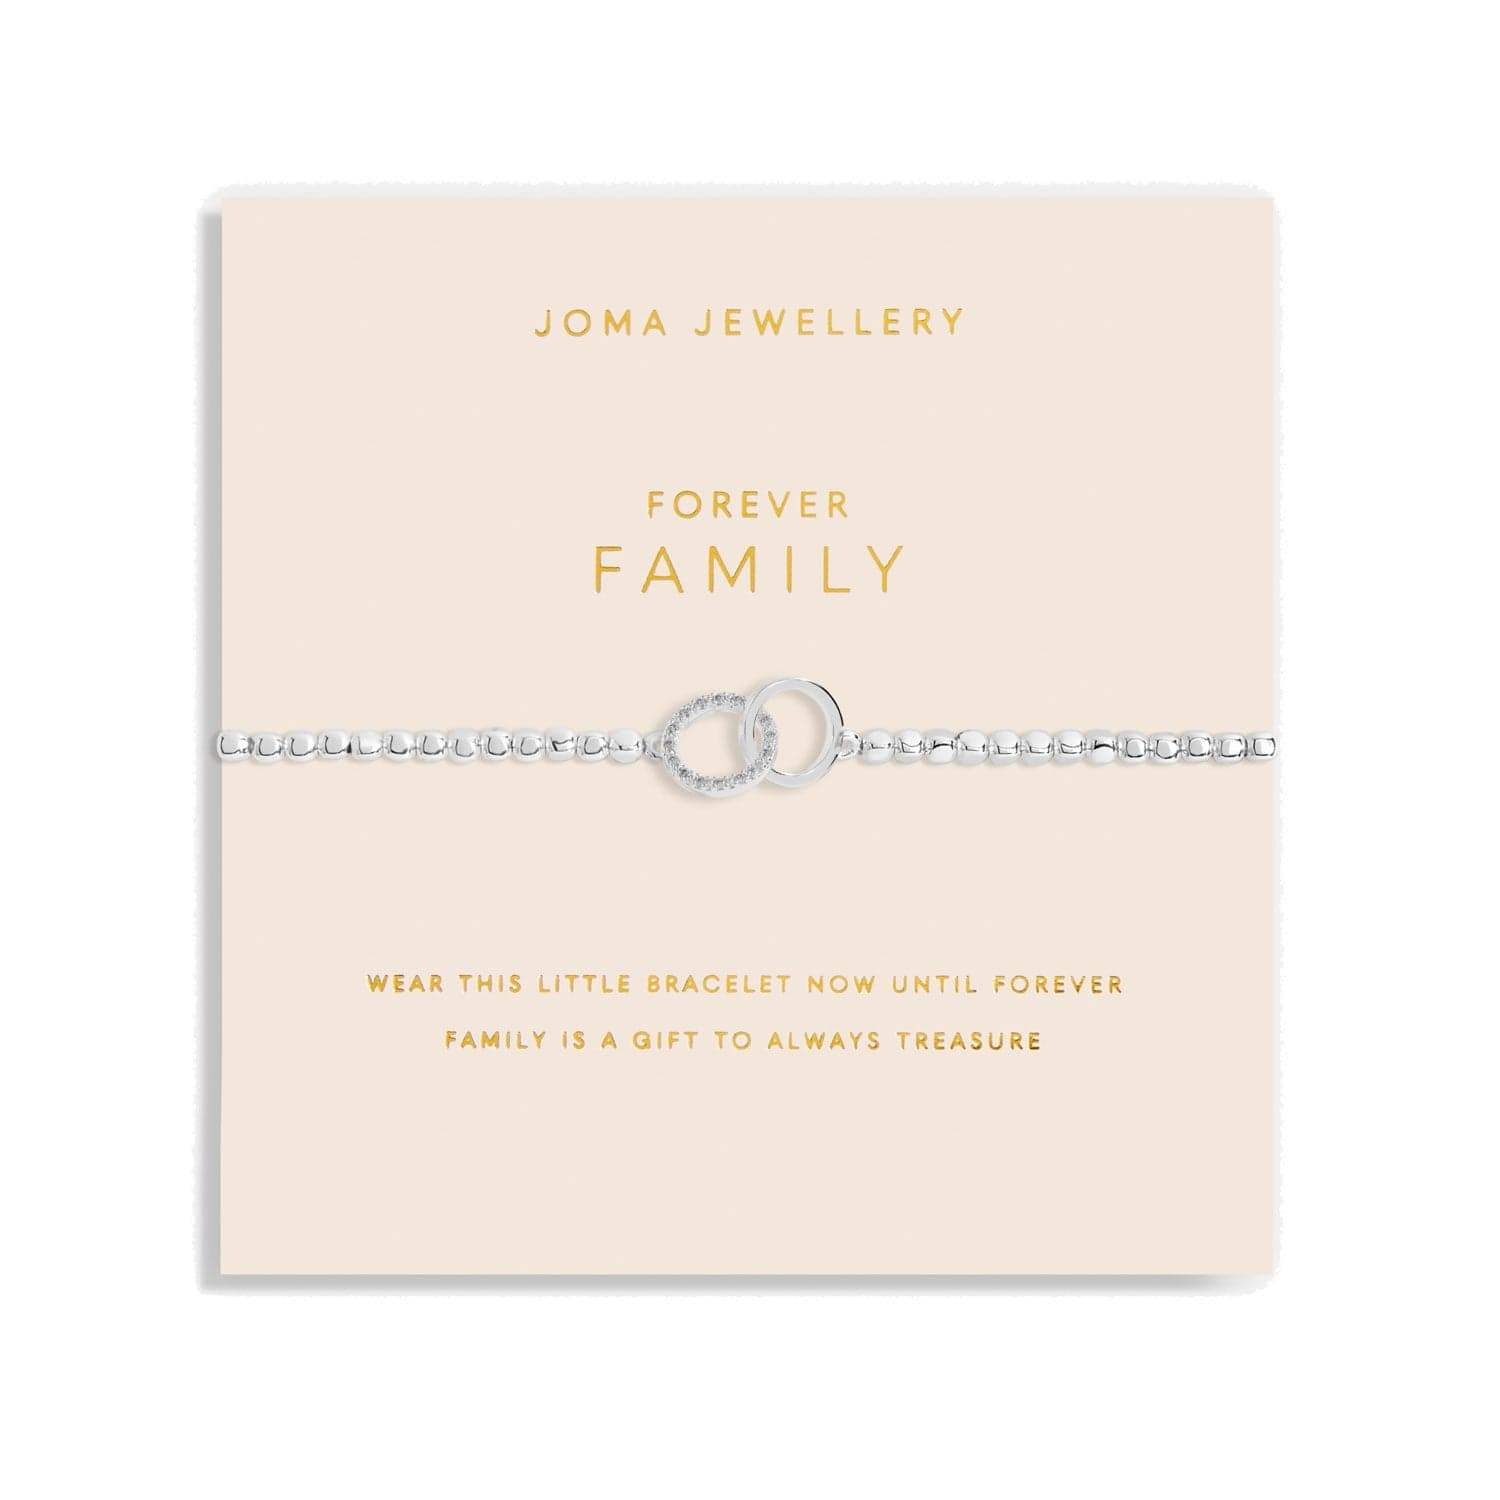 Joma Jewellery Bracelets Joma Jewellery Forever Yours Bracelet - Forever Family